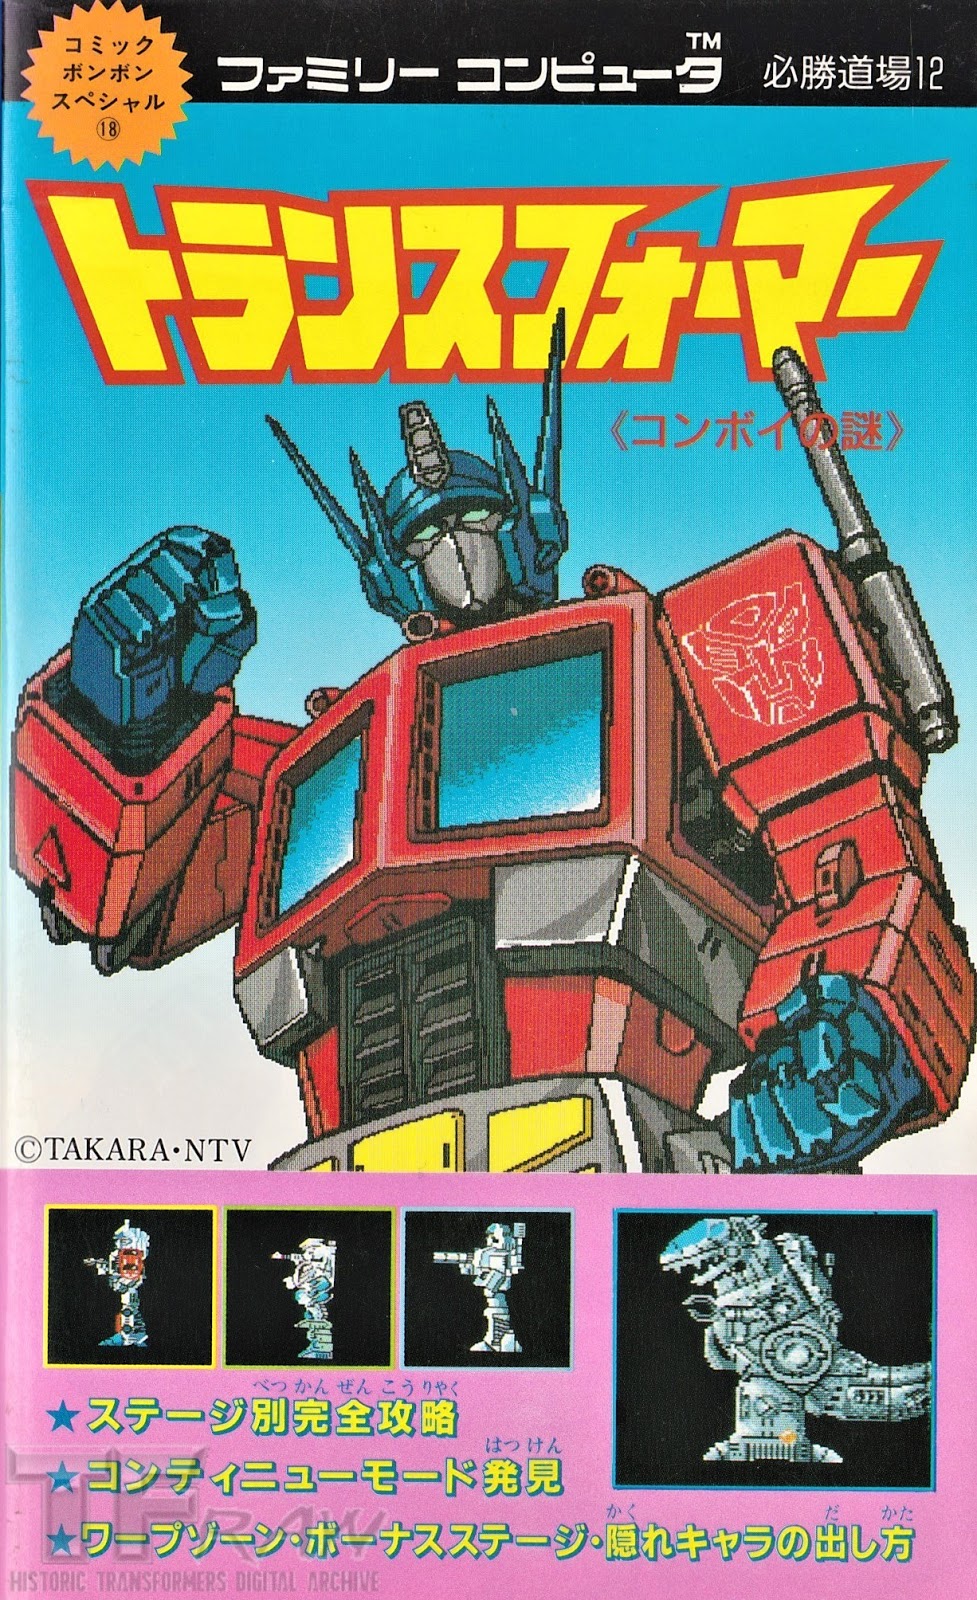 Transformer перевод. The Transformers: Mystery of Convoy игра. Mystery of Convoy. Пурпурный конвой трансформеры. Transformers Arcana.